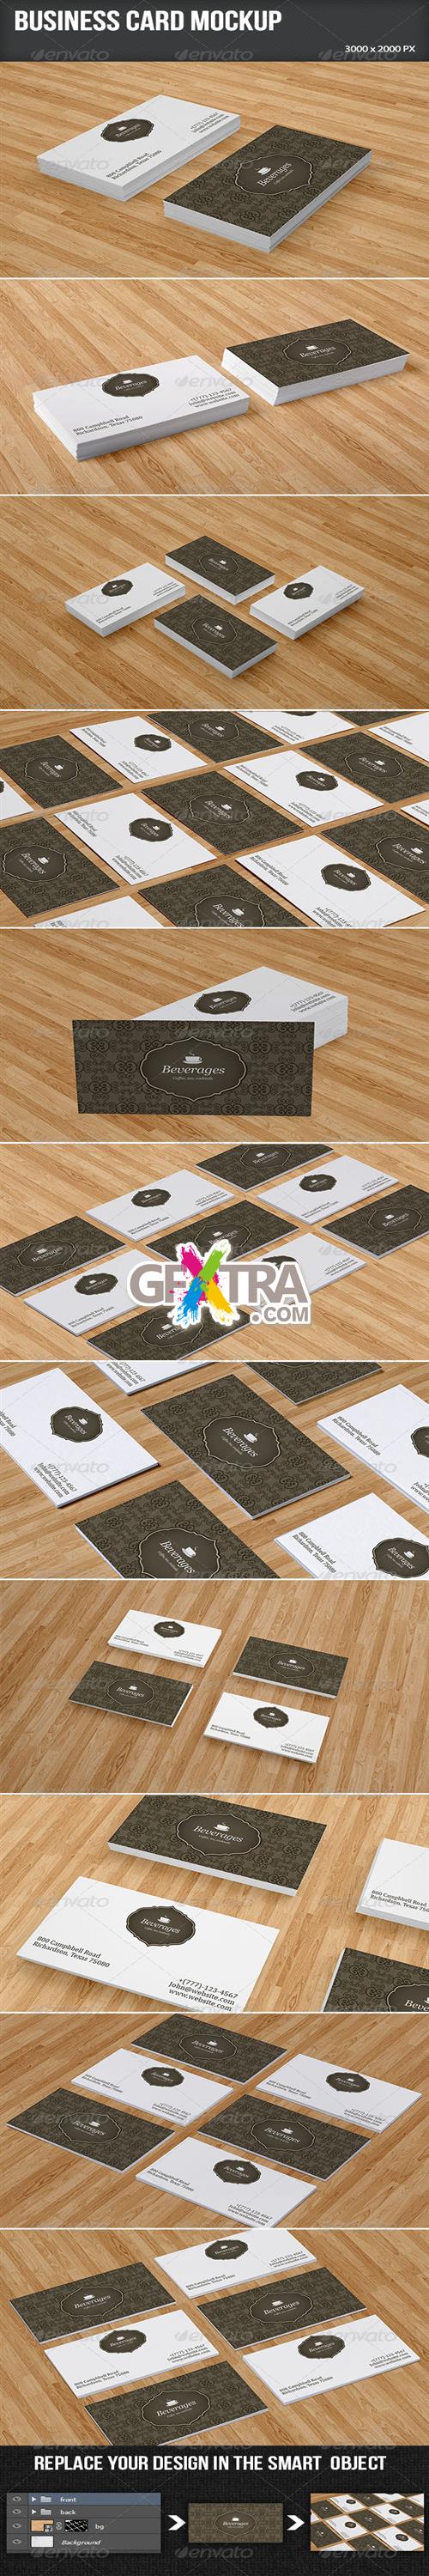 GraphicRiver - Business Card Mockup Set